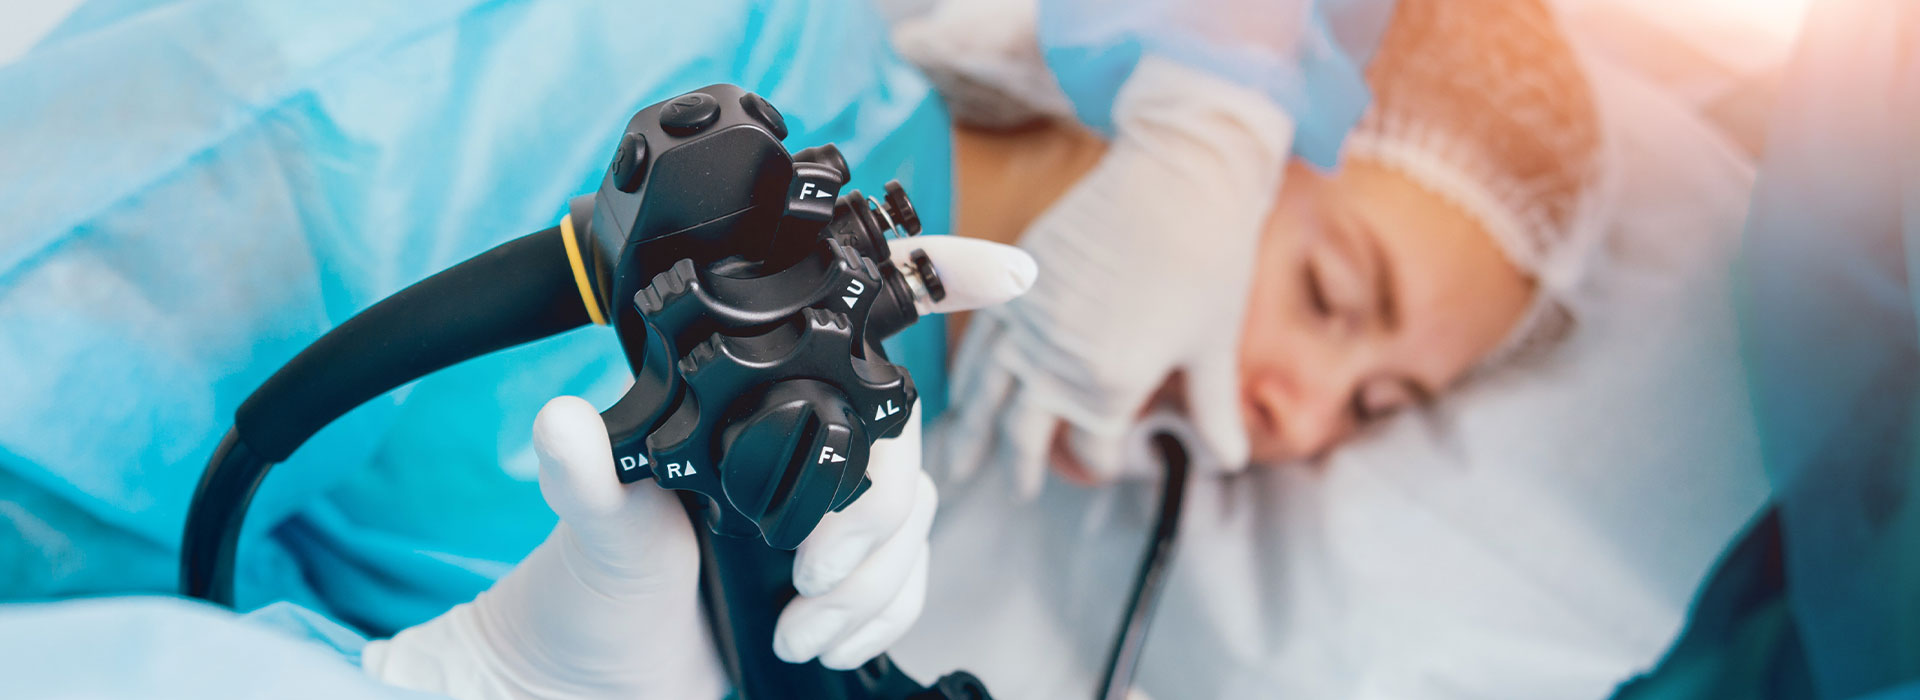 Doctor holding endoscope before gastroscopy